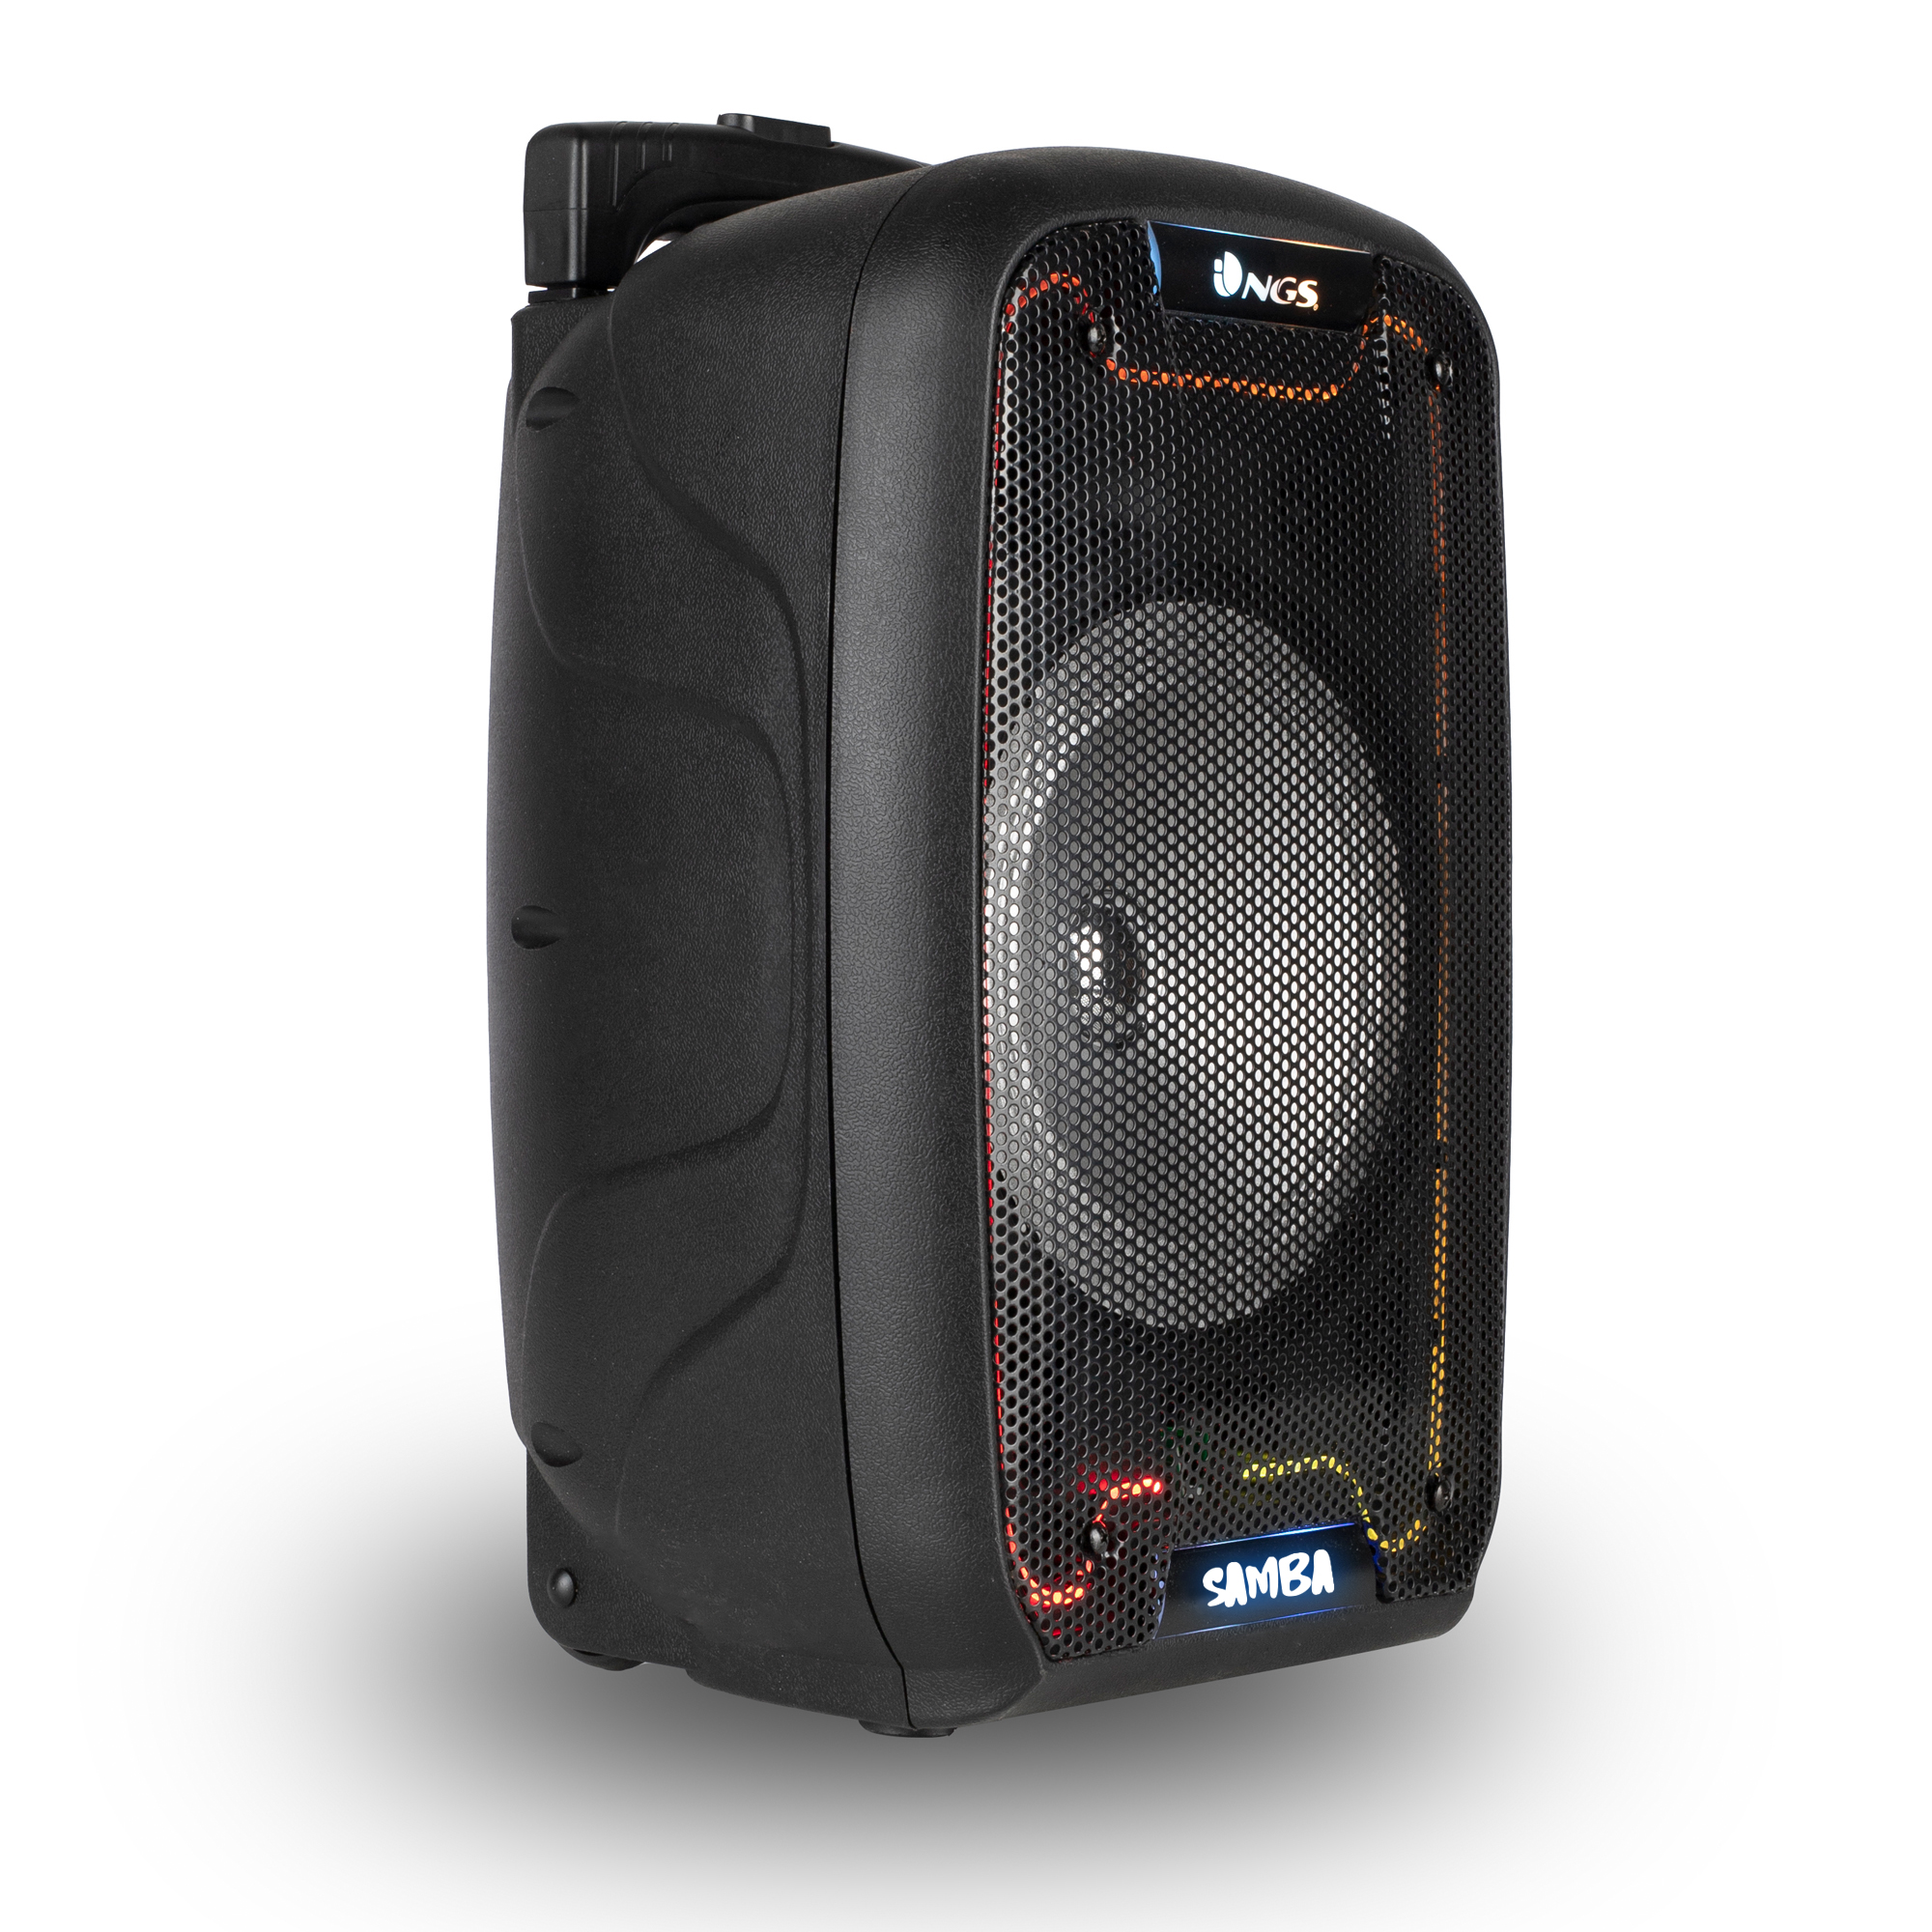 NGS Wild Lautsprecher (Aktiv-speaker, Premium Samba Schwarz)